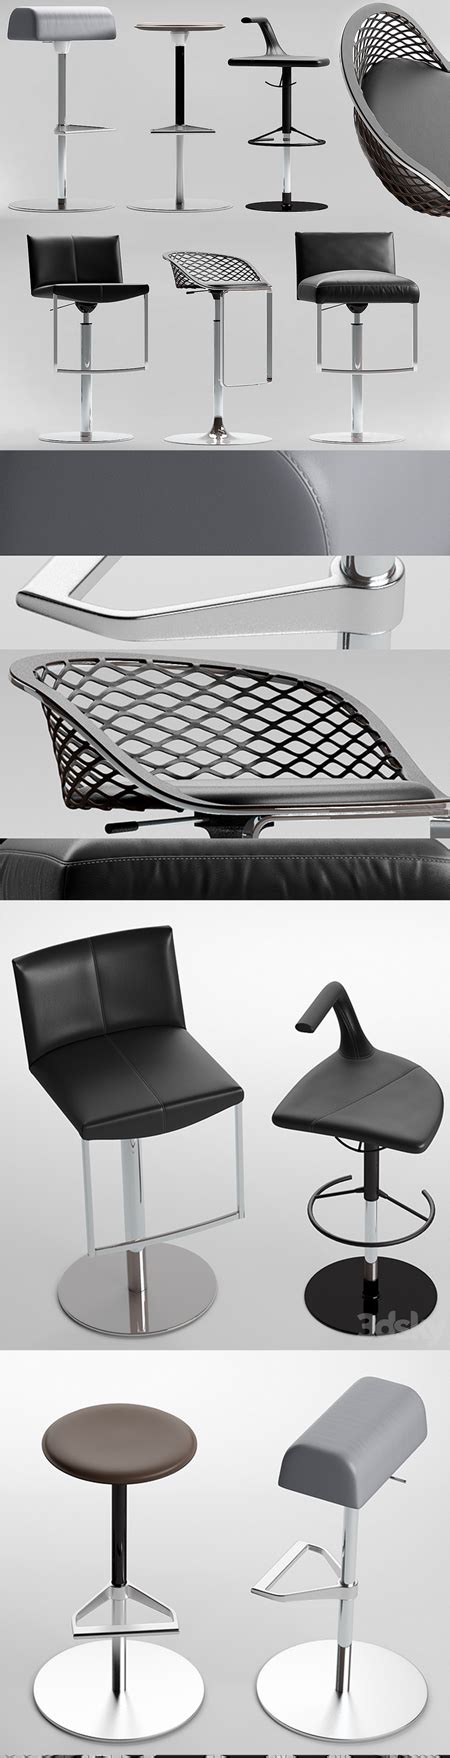 Bar Chairs 3d Model Down3dmodels